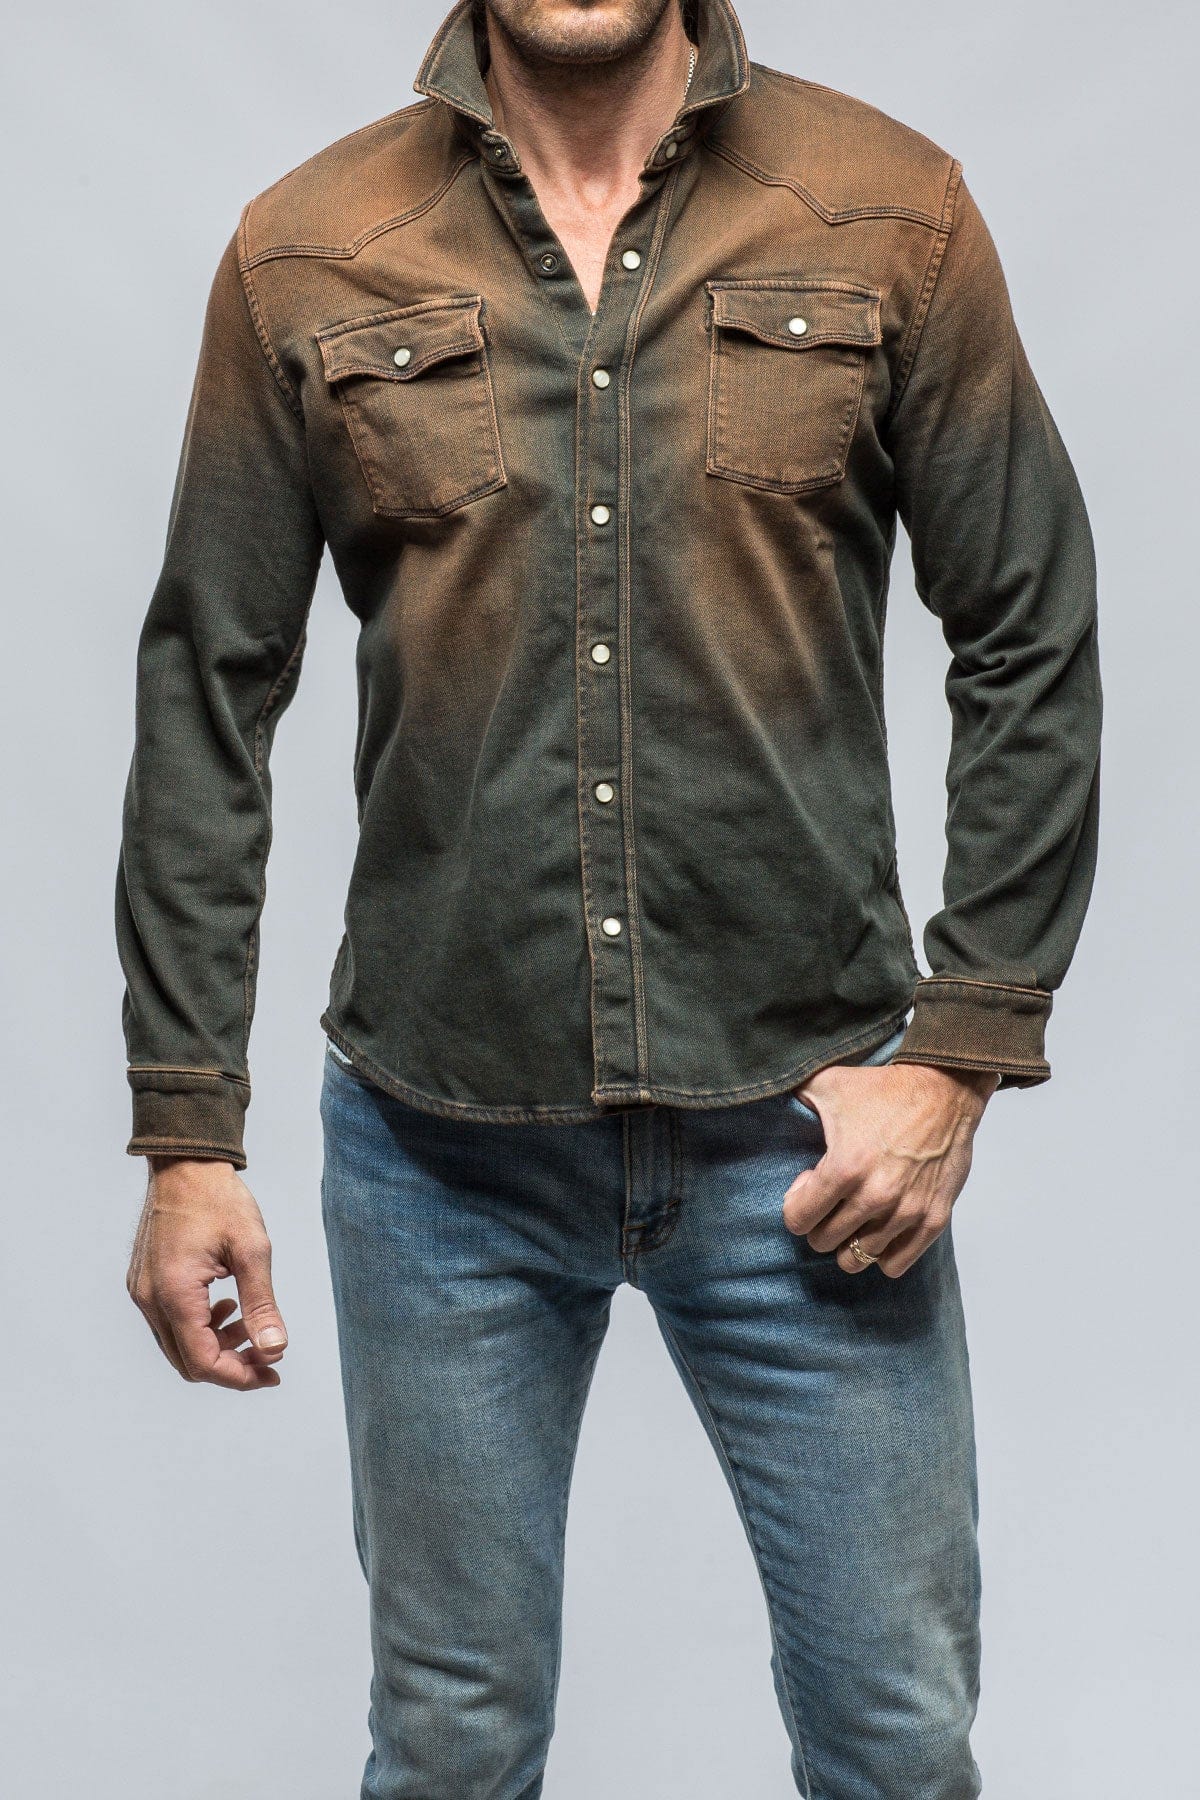 Roper Western Snap Shirt in Ironside - AXEL'S